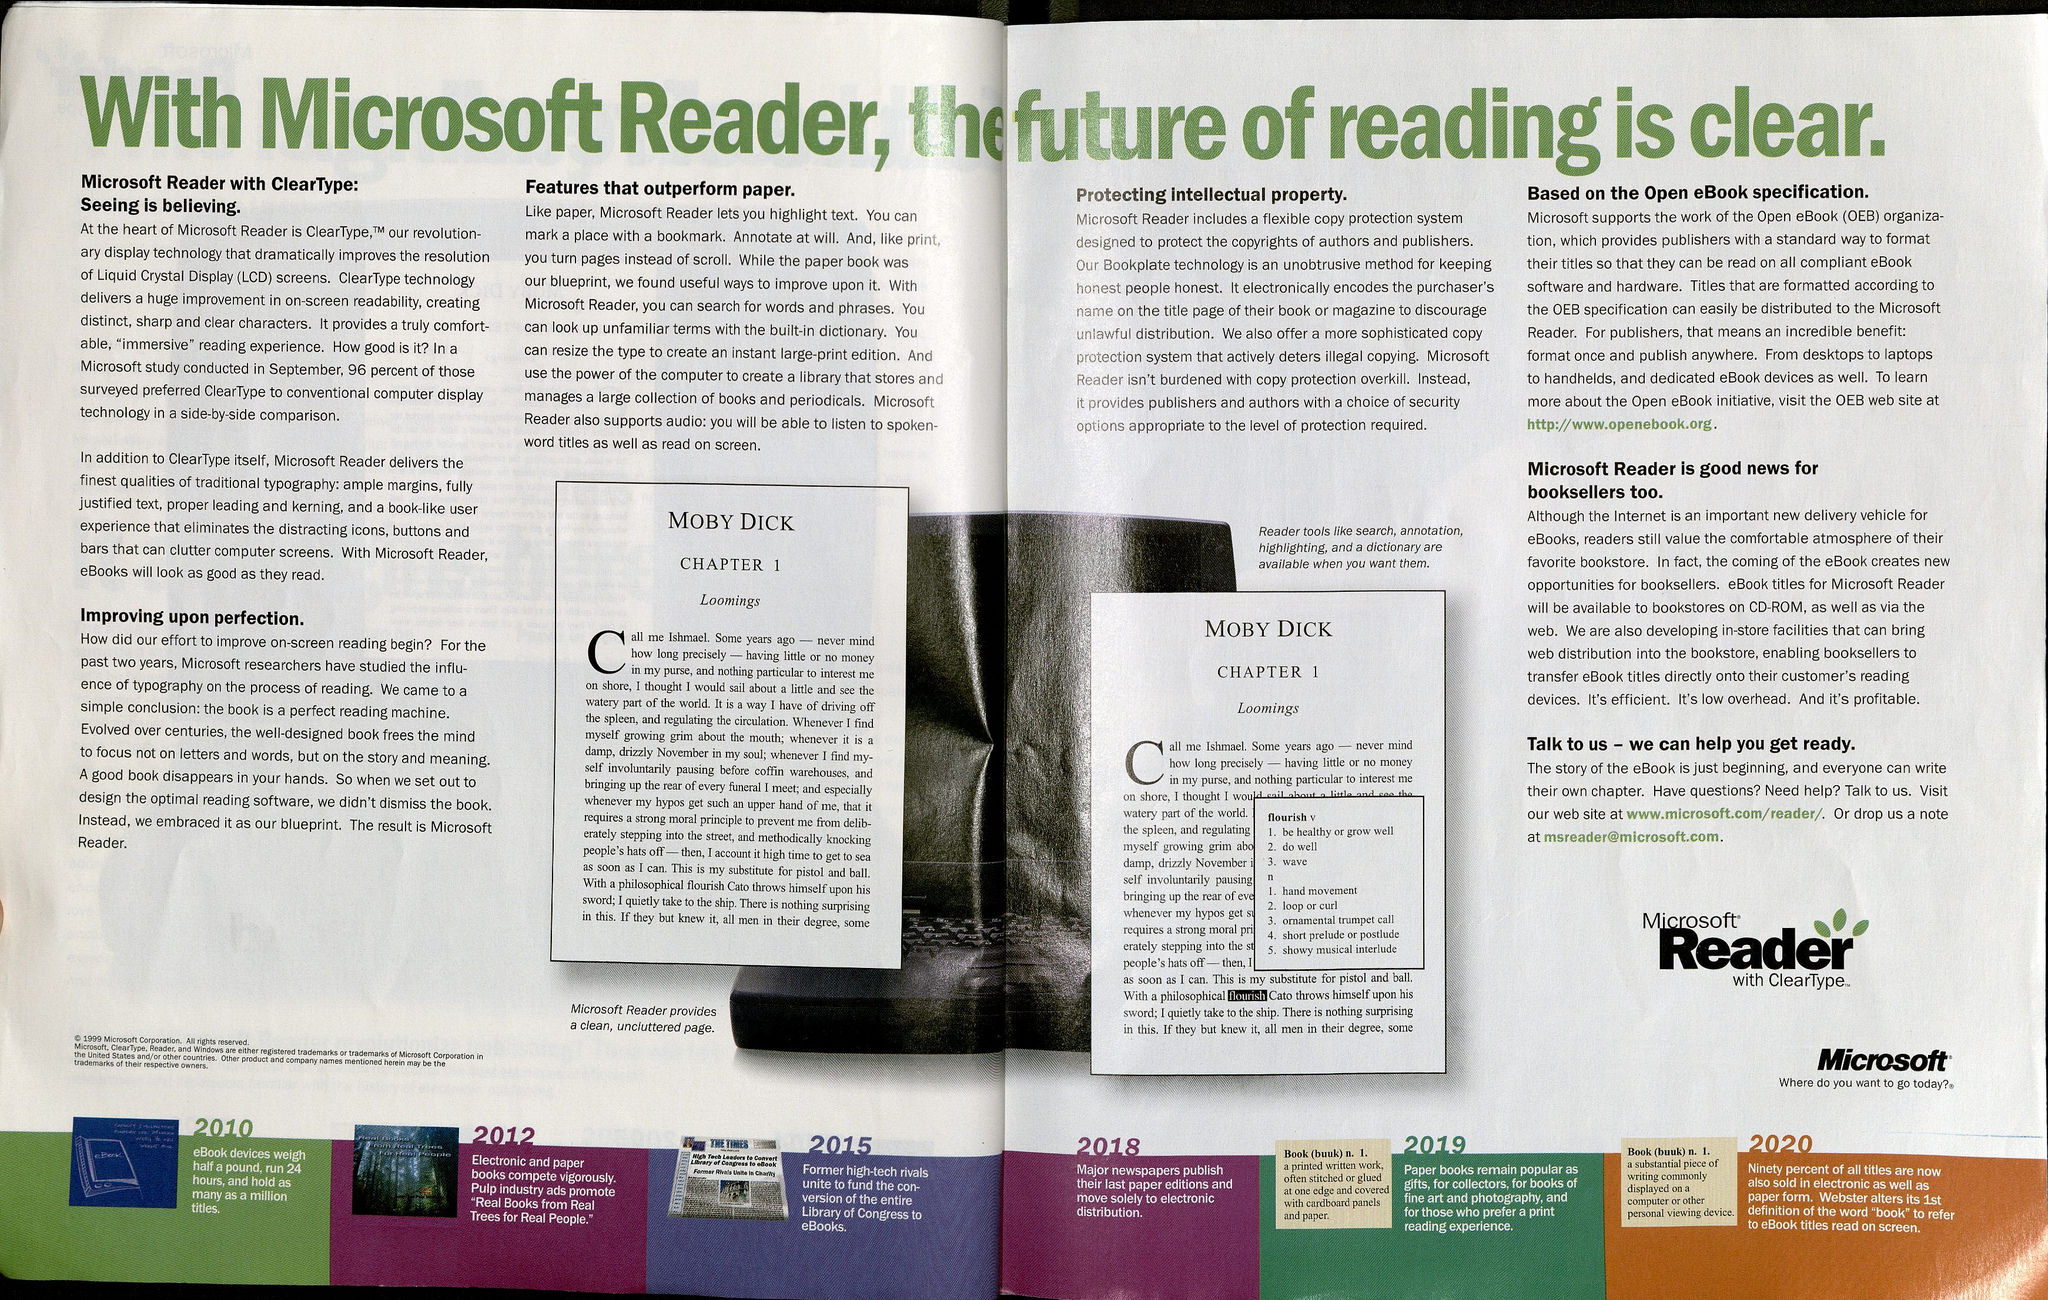 Microsoft Reader Ad - 1999.jpg